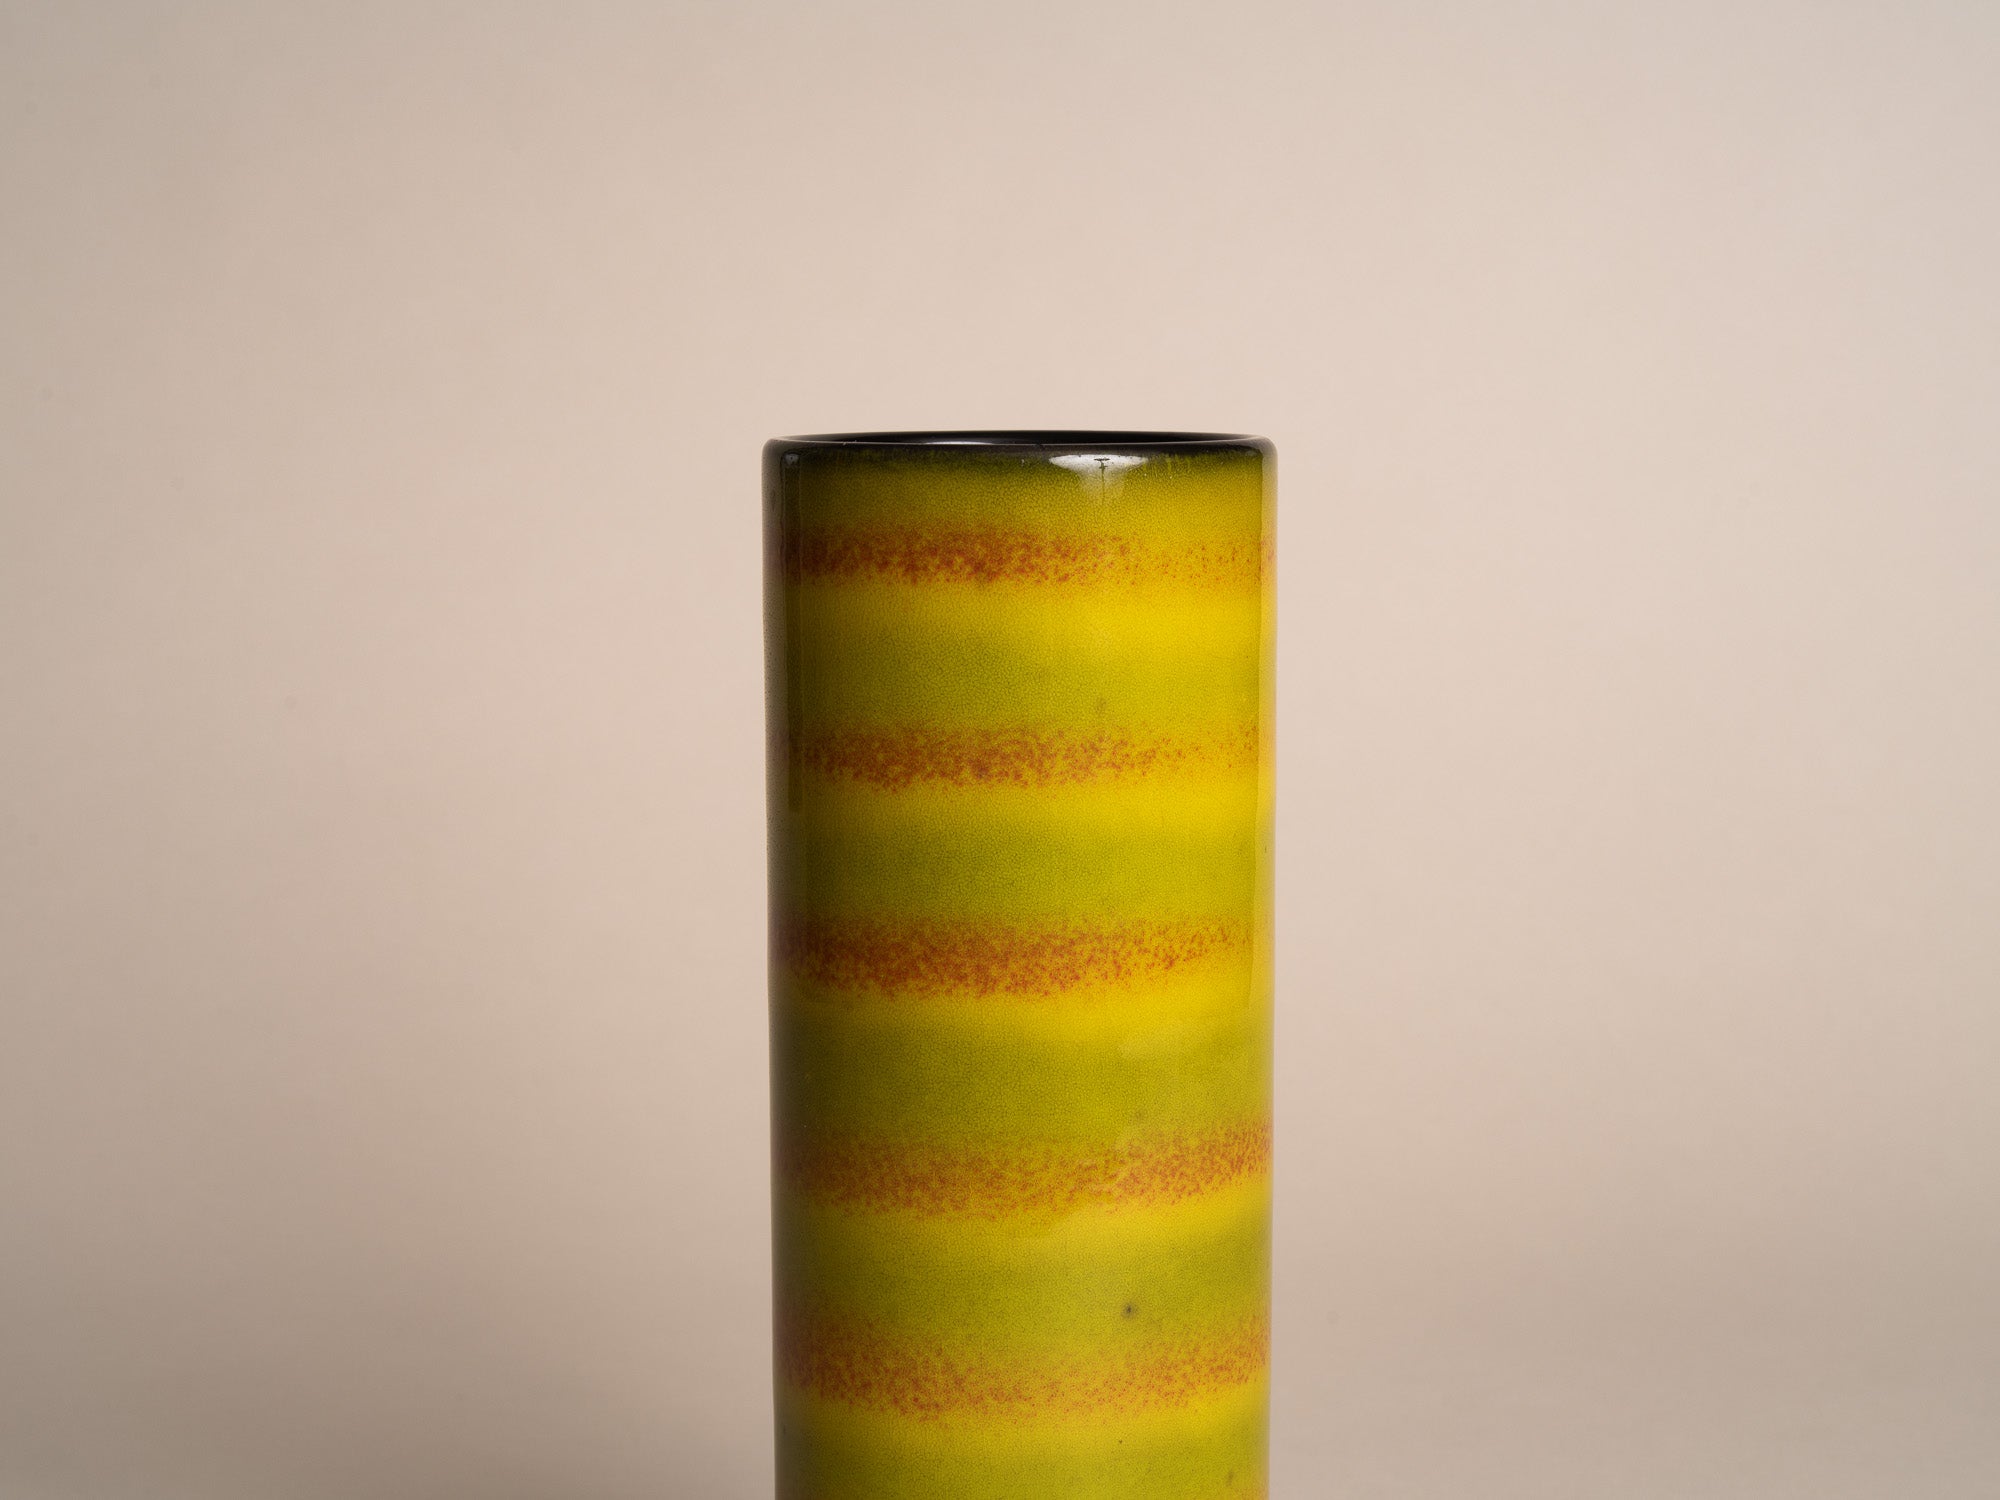 Vase rouleau de Fernand Elchinger à soufflenheim, France (vers 1957-58)..Cylindric vase by Fernand Elchinger in soufflenheim, France (circa 1957-58)